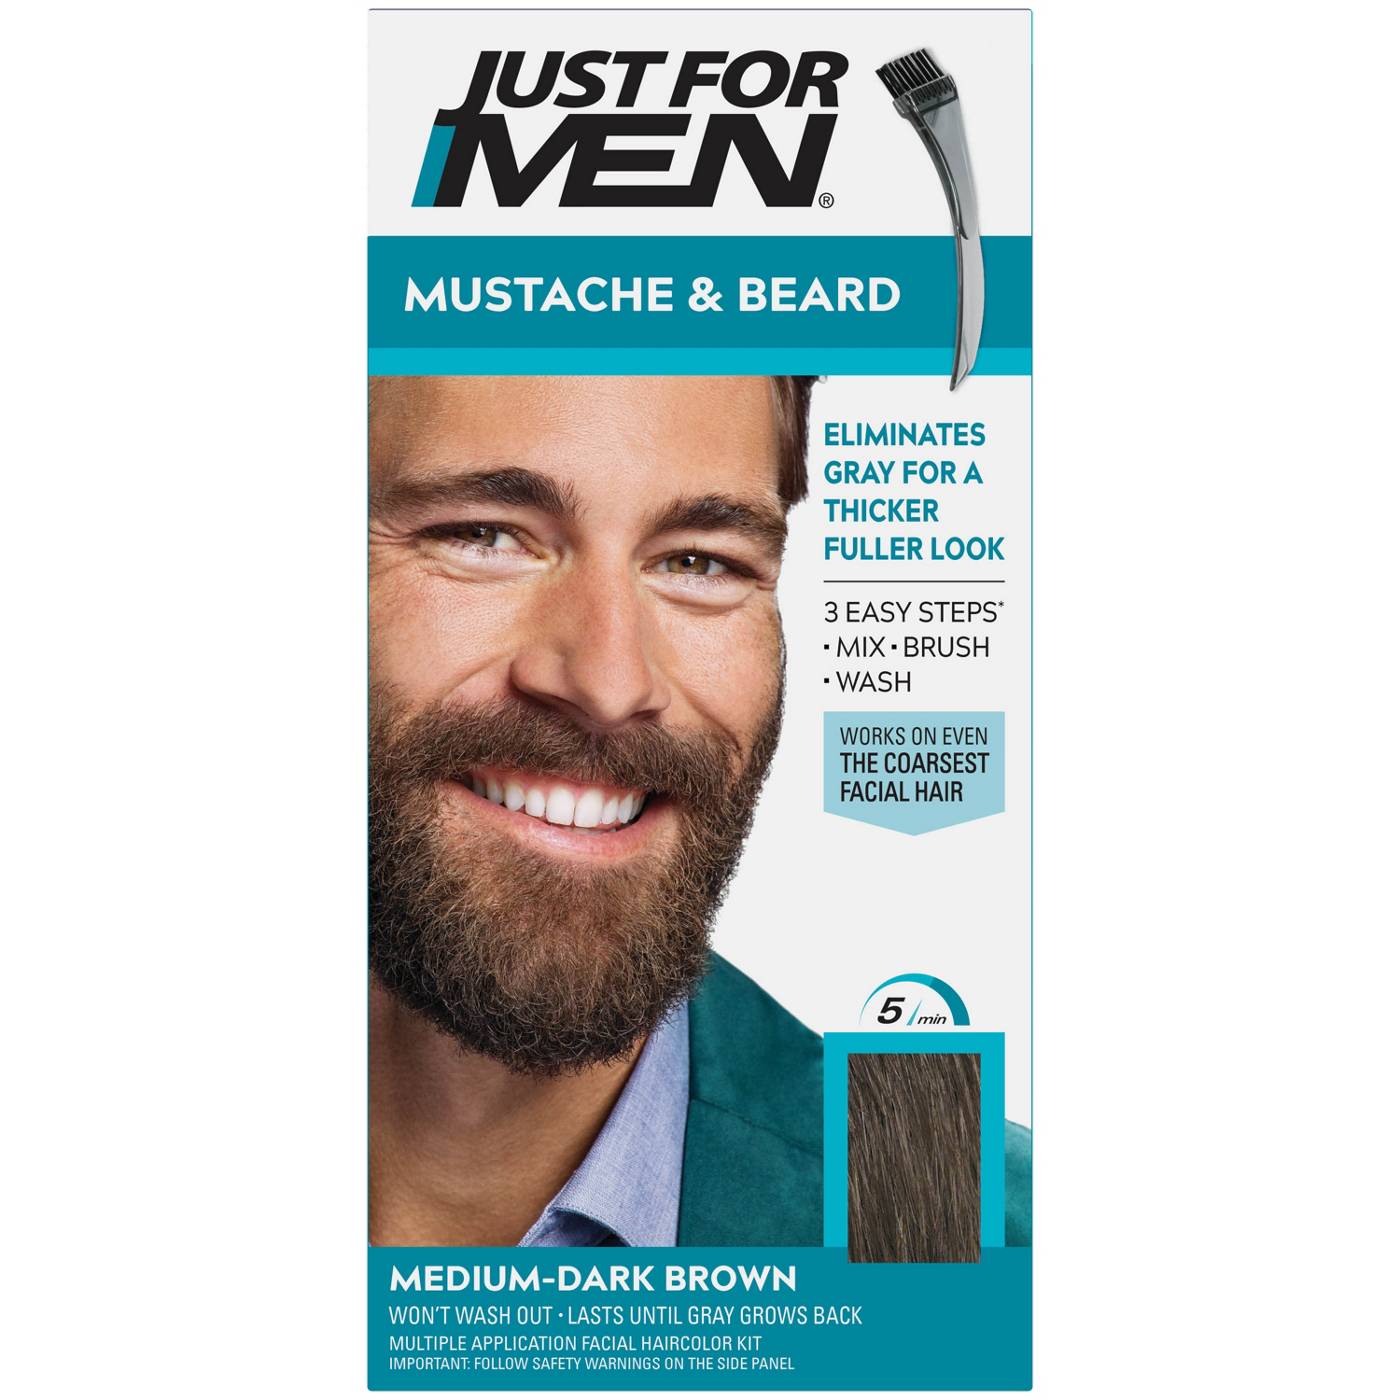 Just For Men Mustache & Beard Medium-Dark Brown M-40 Brush-In Color Gel; image 2 of 2